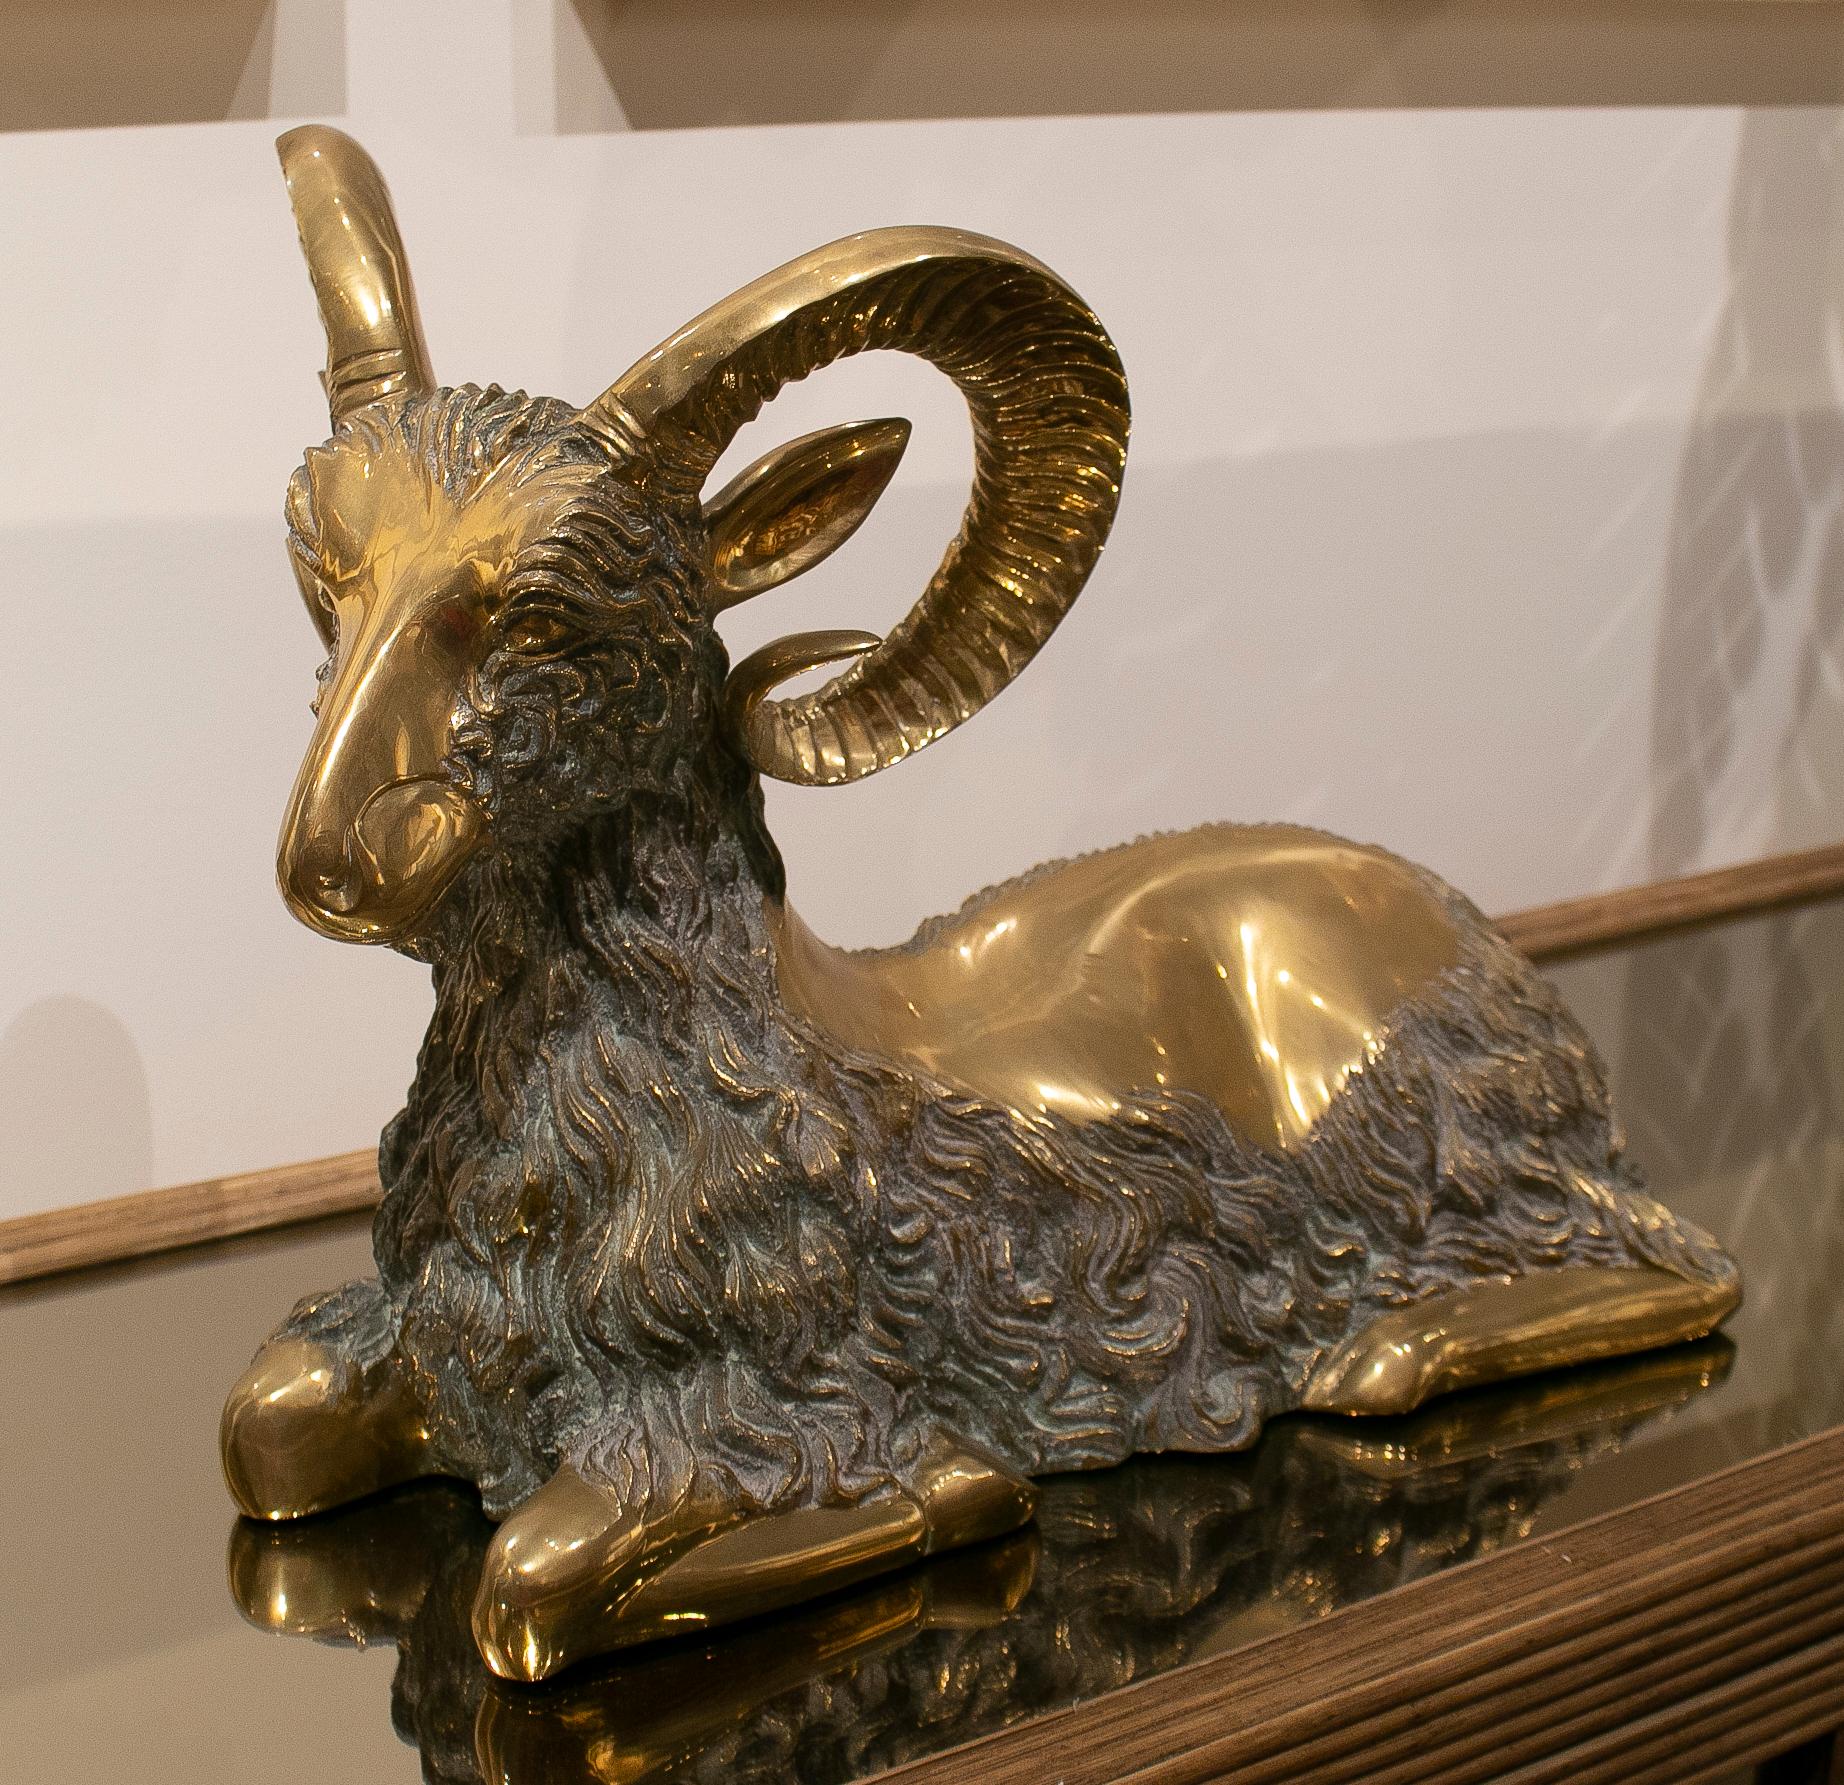 1970s Spanish sitting goat bronze figure sculpture.